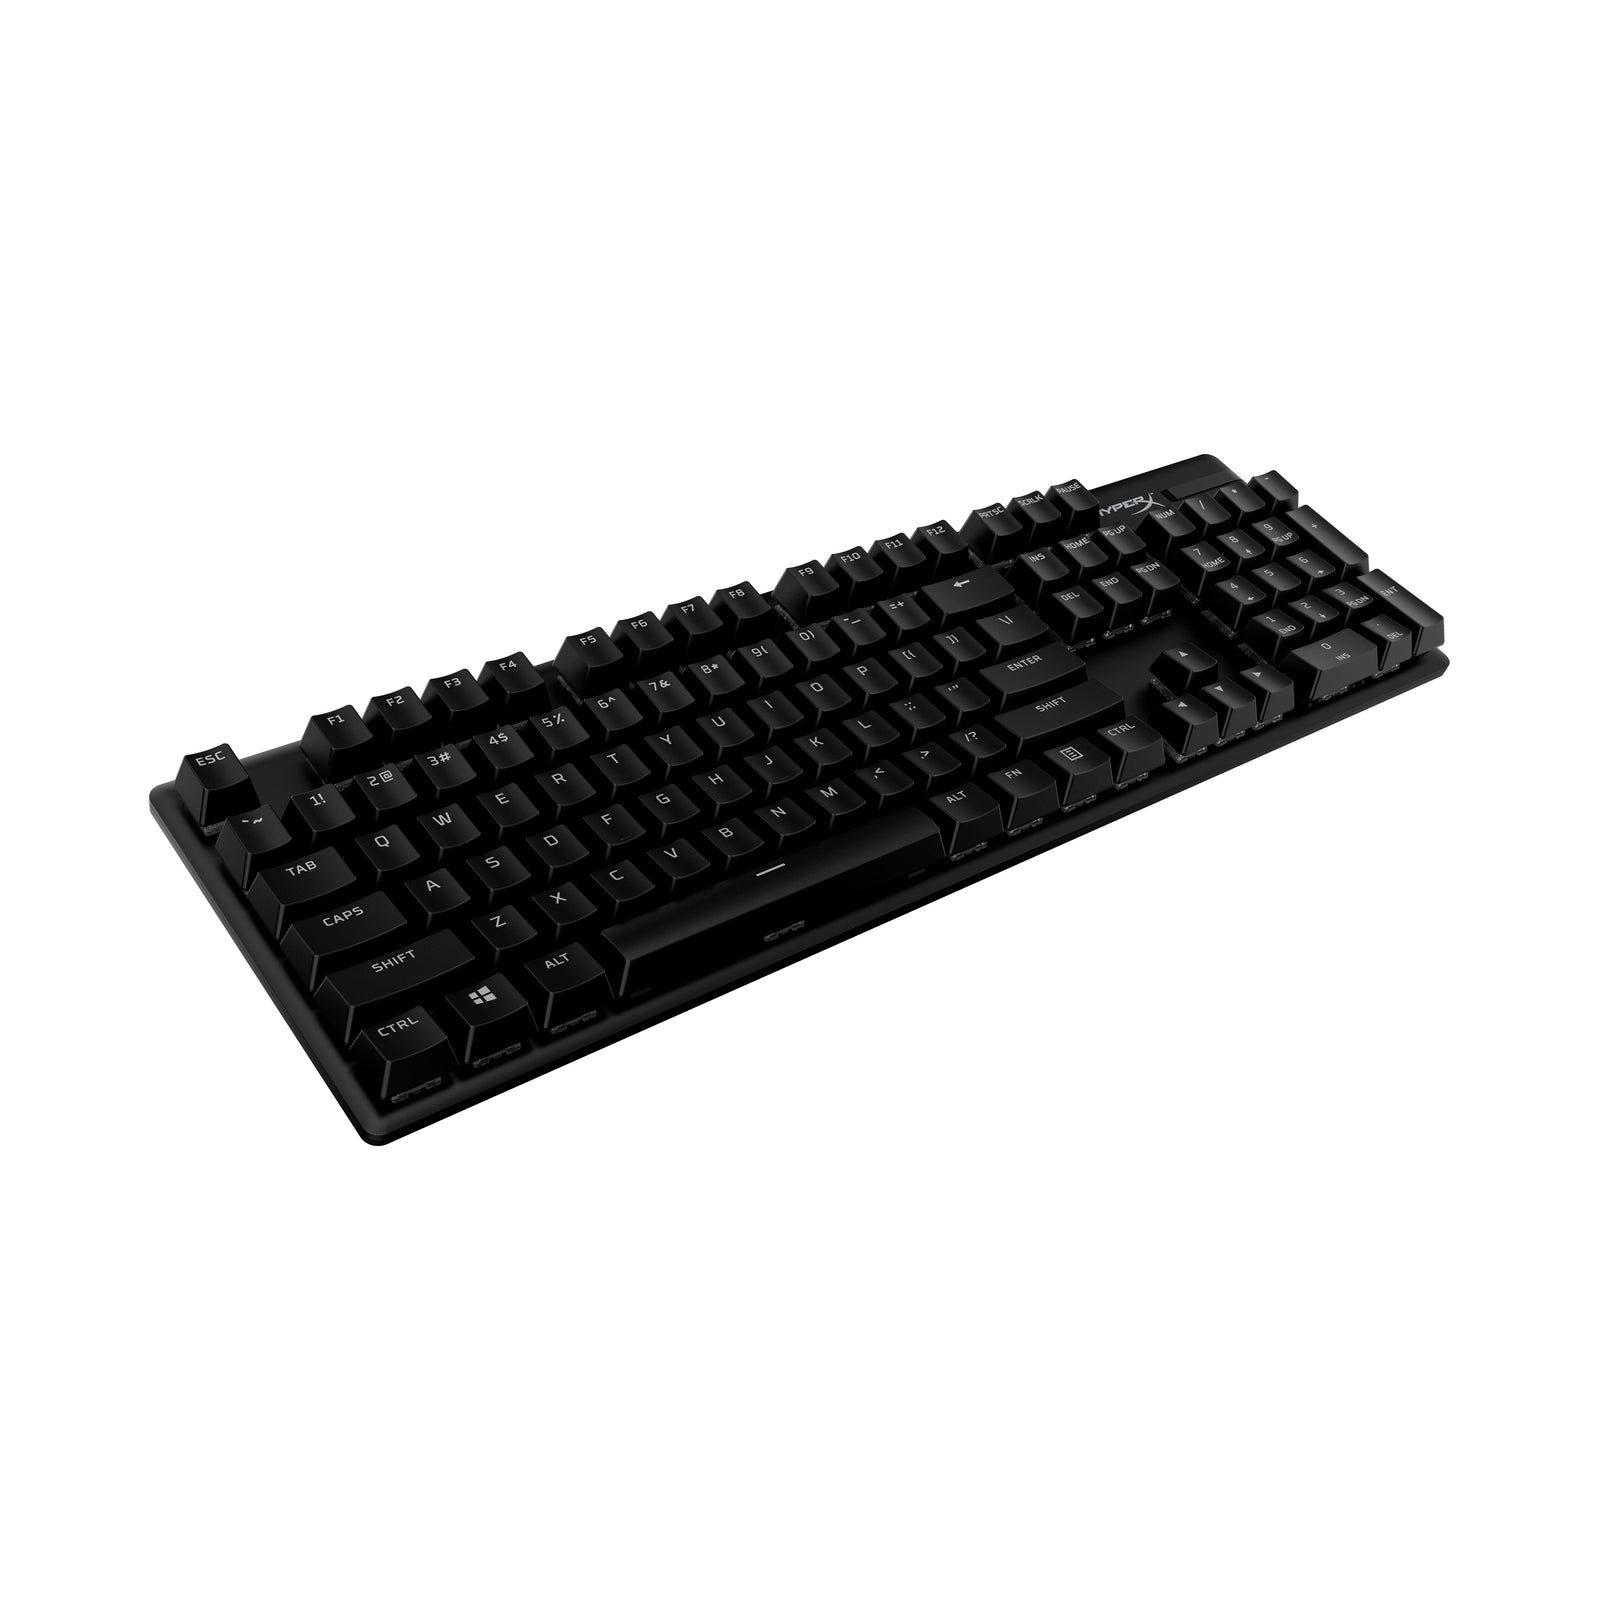 HyperX PBT Keycaps in Black color on an unlit keyboard